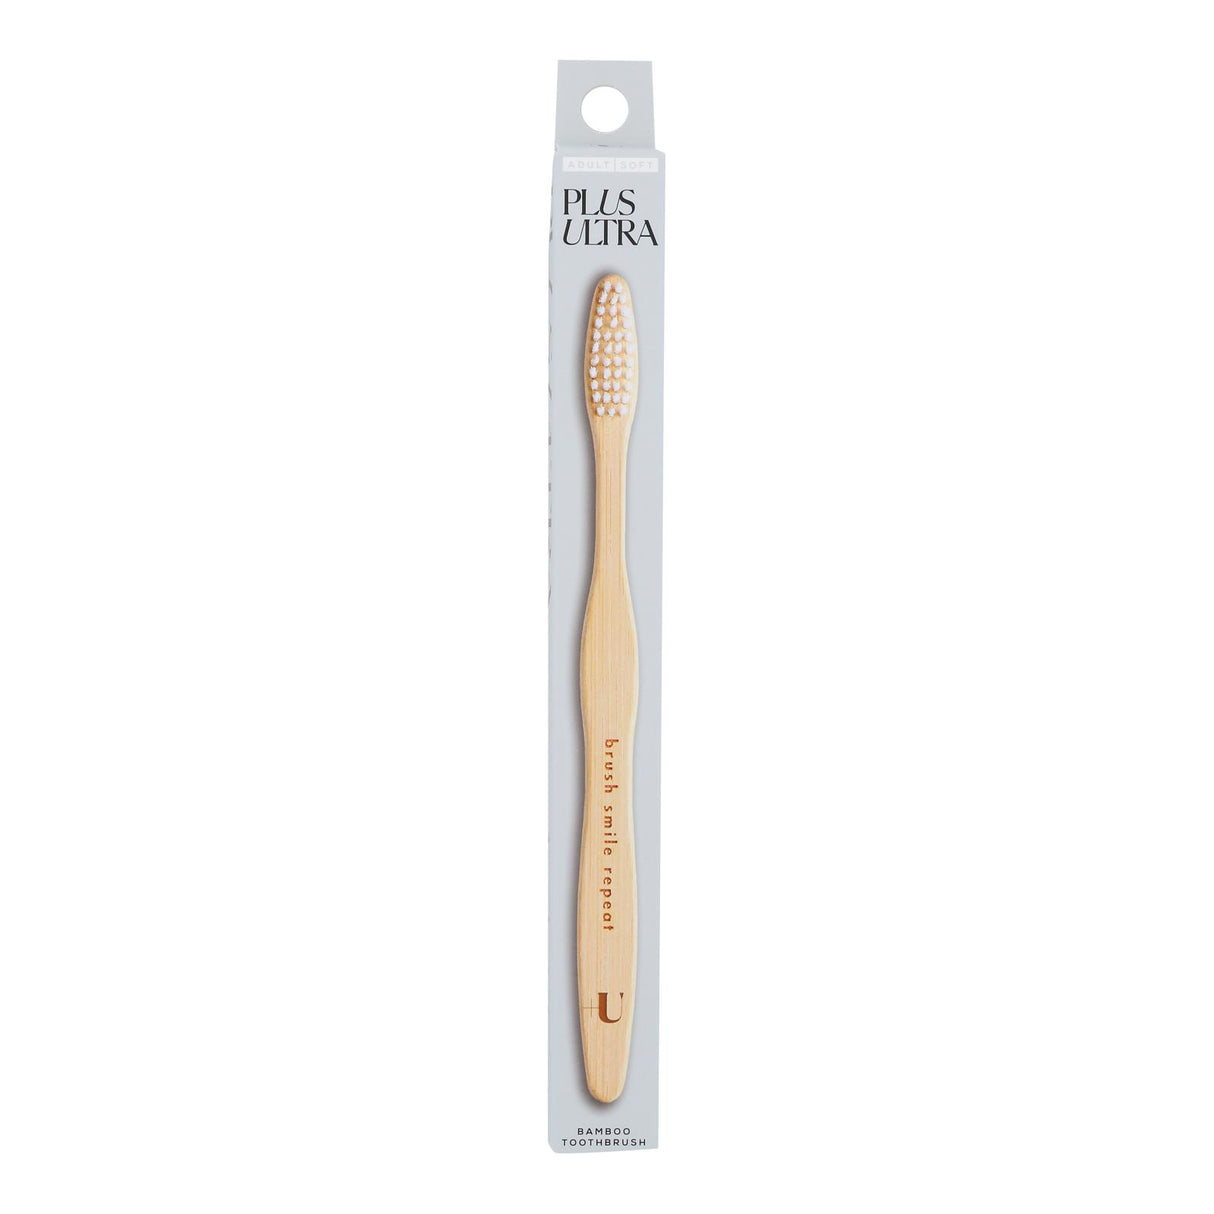 Plus Ultra - Toothbrush Brush Smile Rep - Case Of 12 - 1 Ct